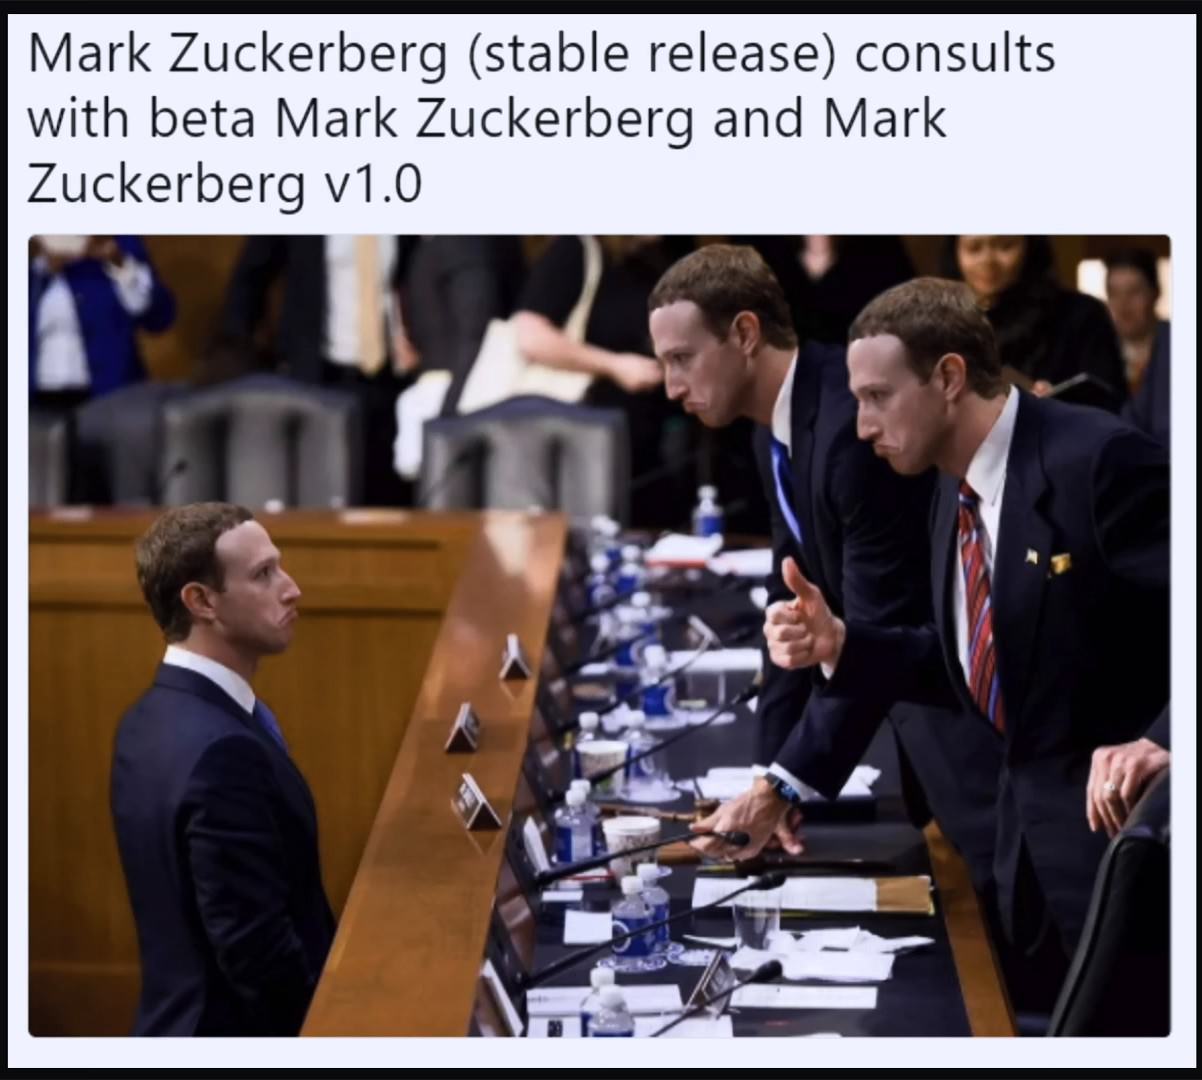 mark zuckerberg senate - Mark Zuckerberg stable release consults with beta Mark Zuckerberg and Mark Zuckerberg v1.0